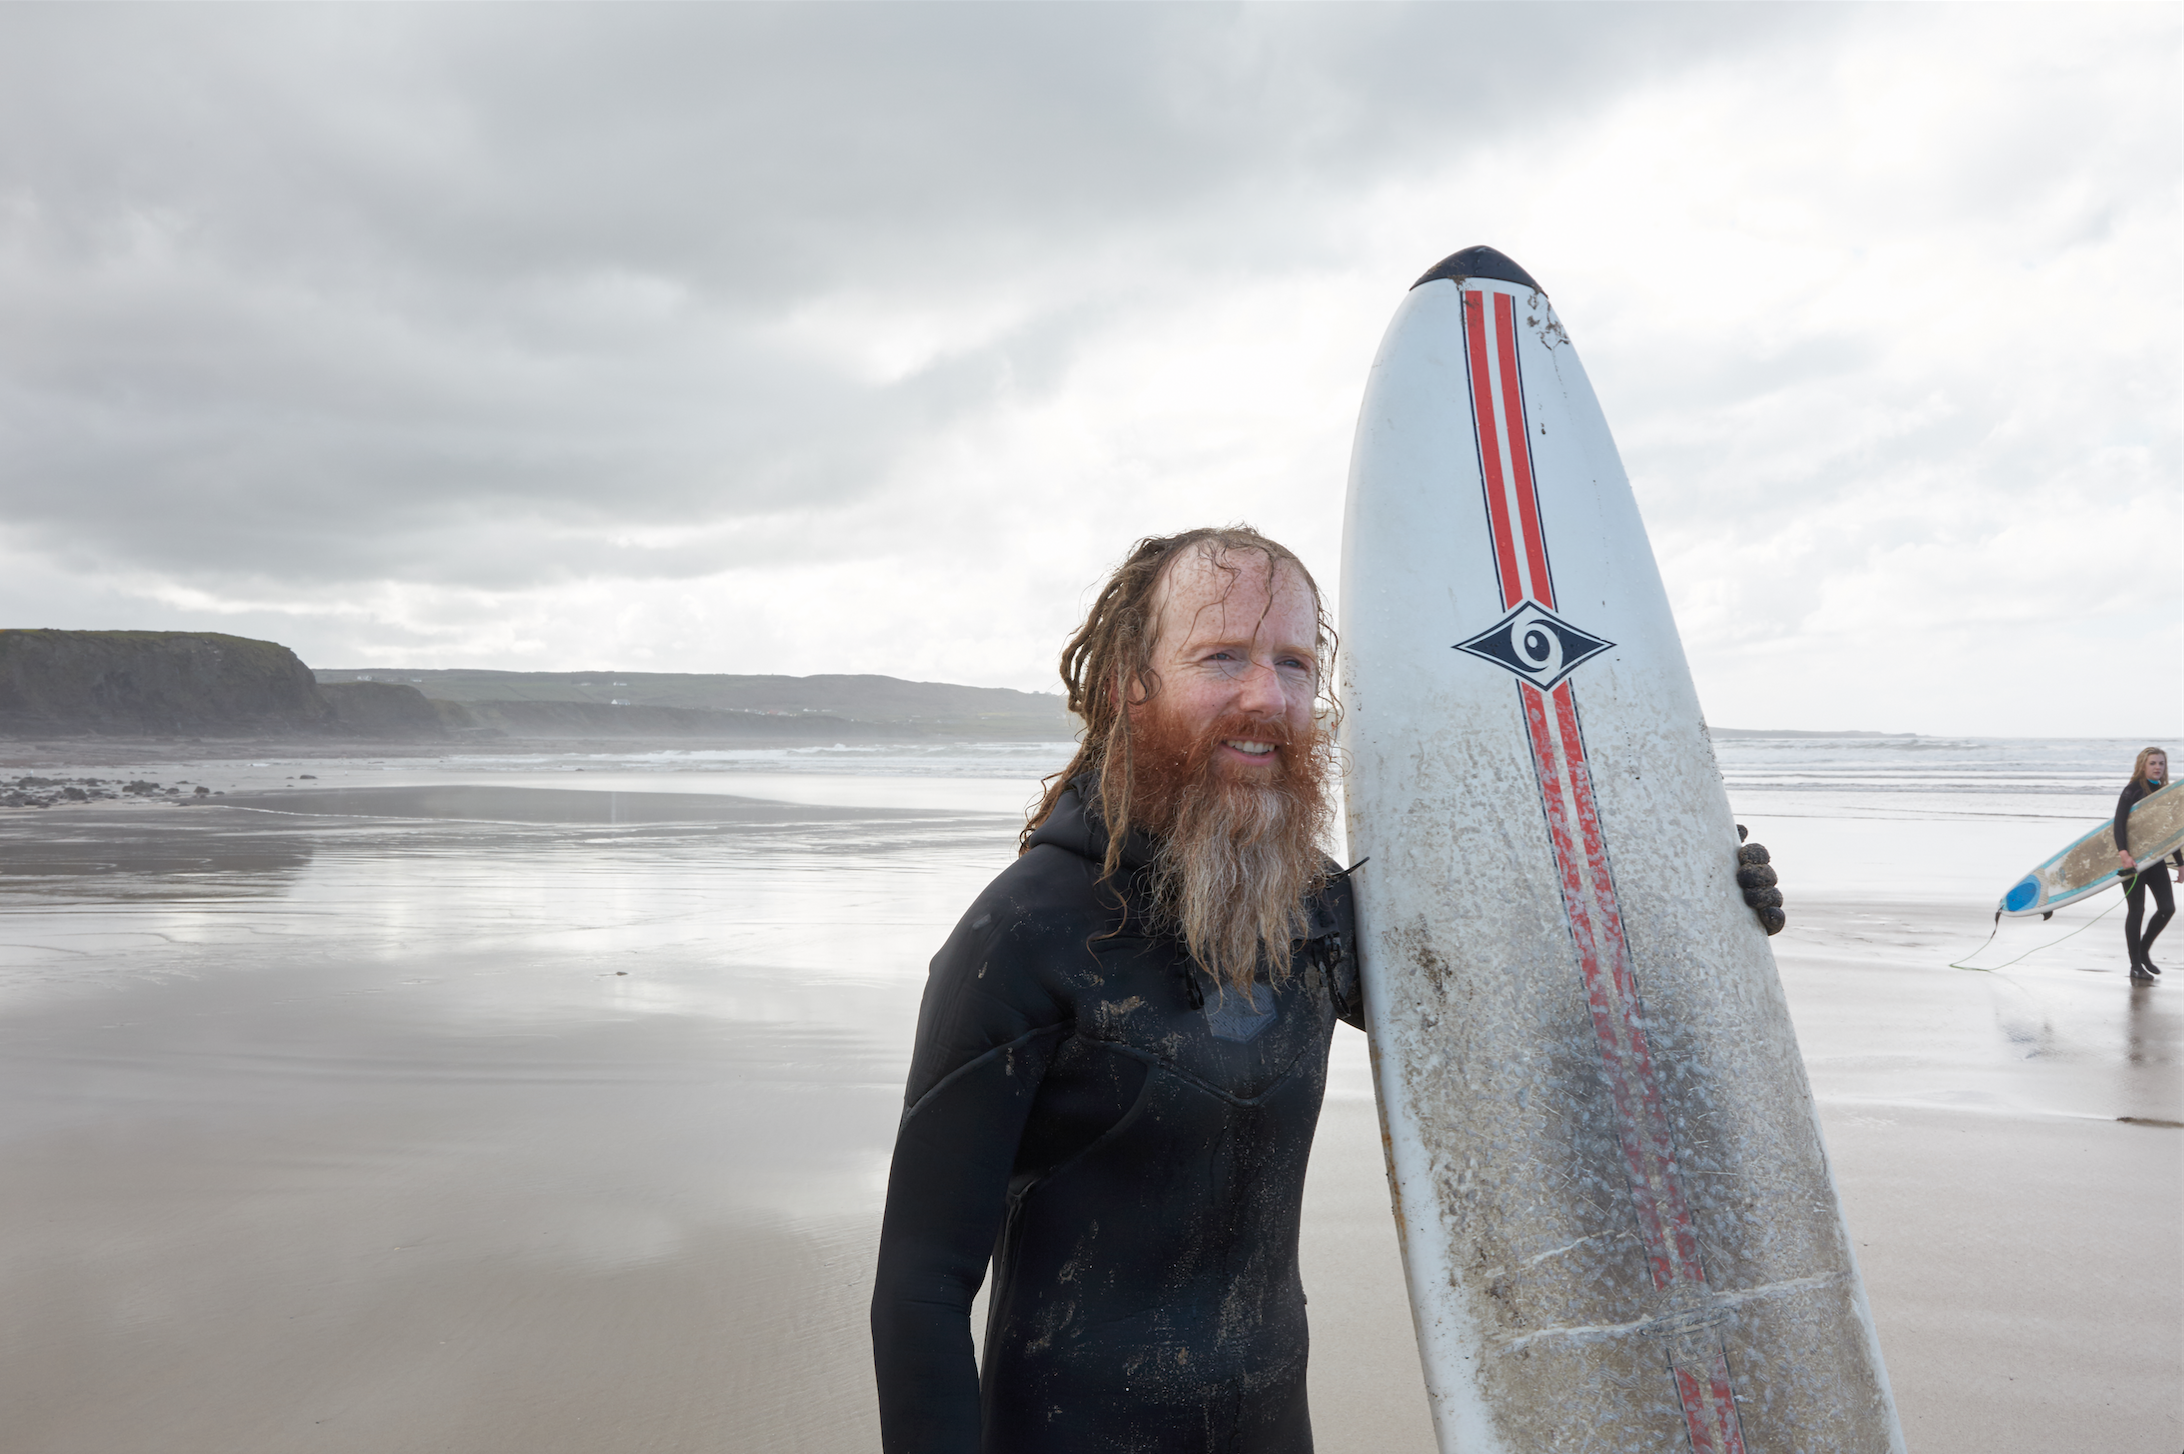 Surfer on a beach in Ireland